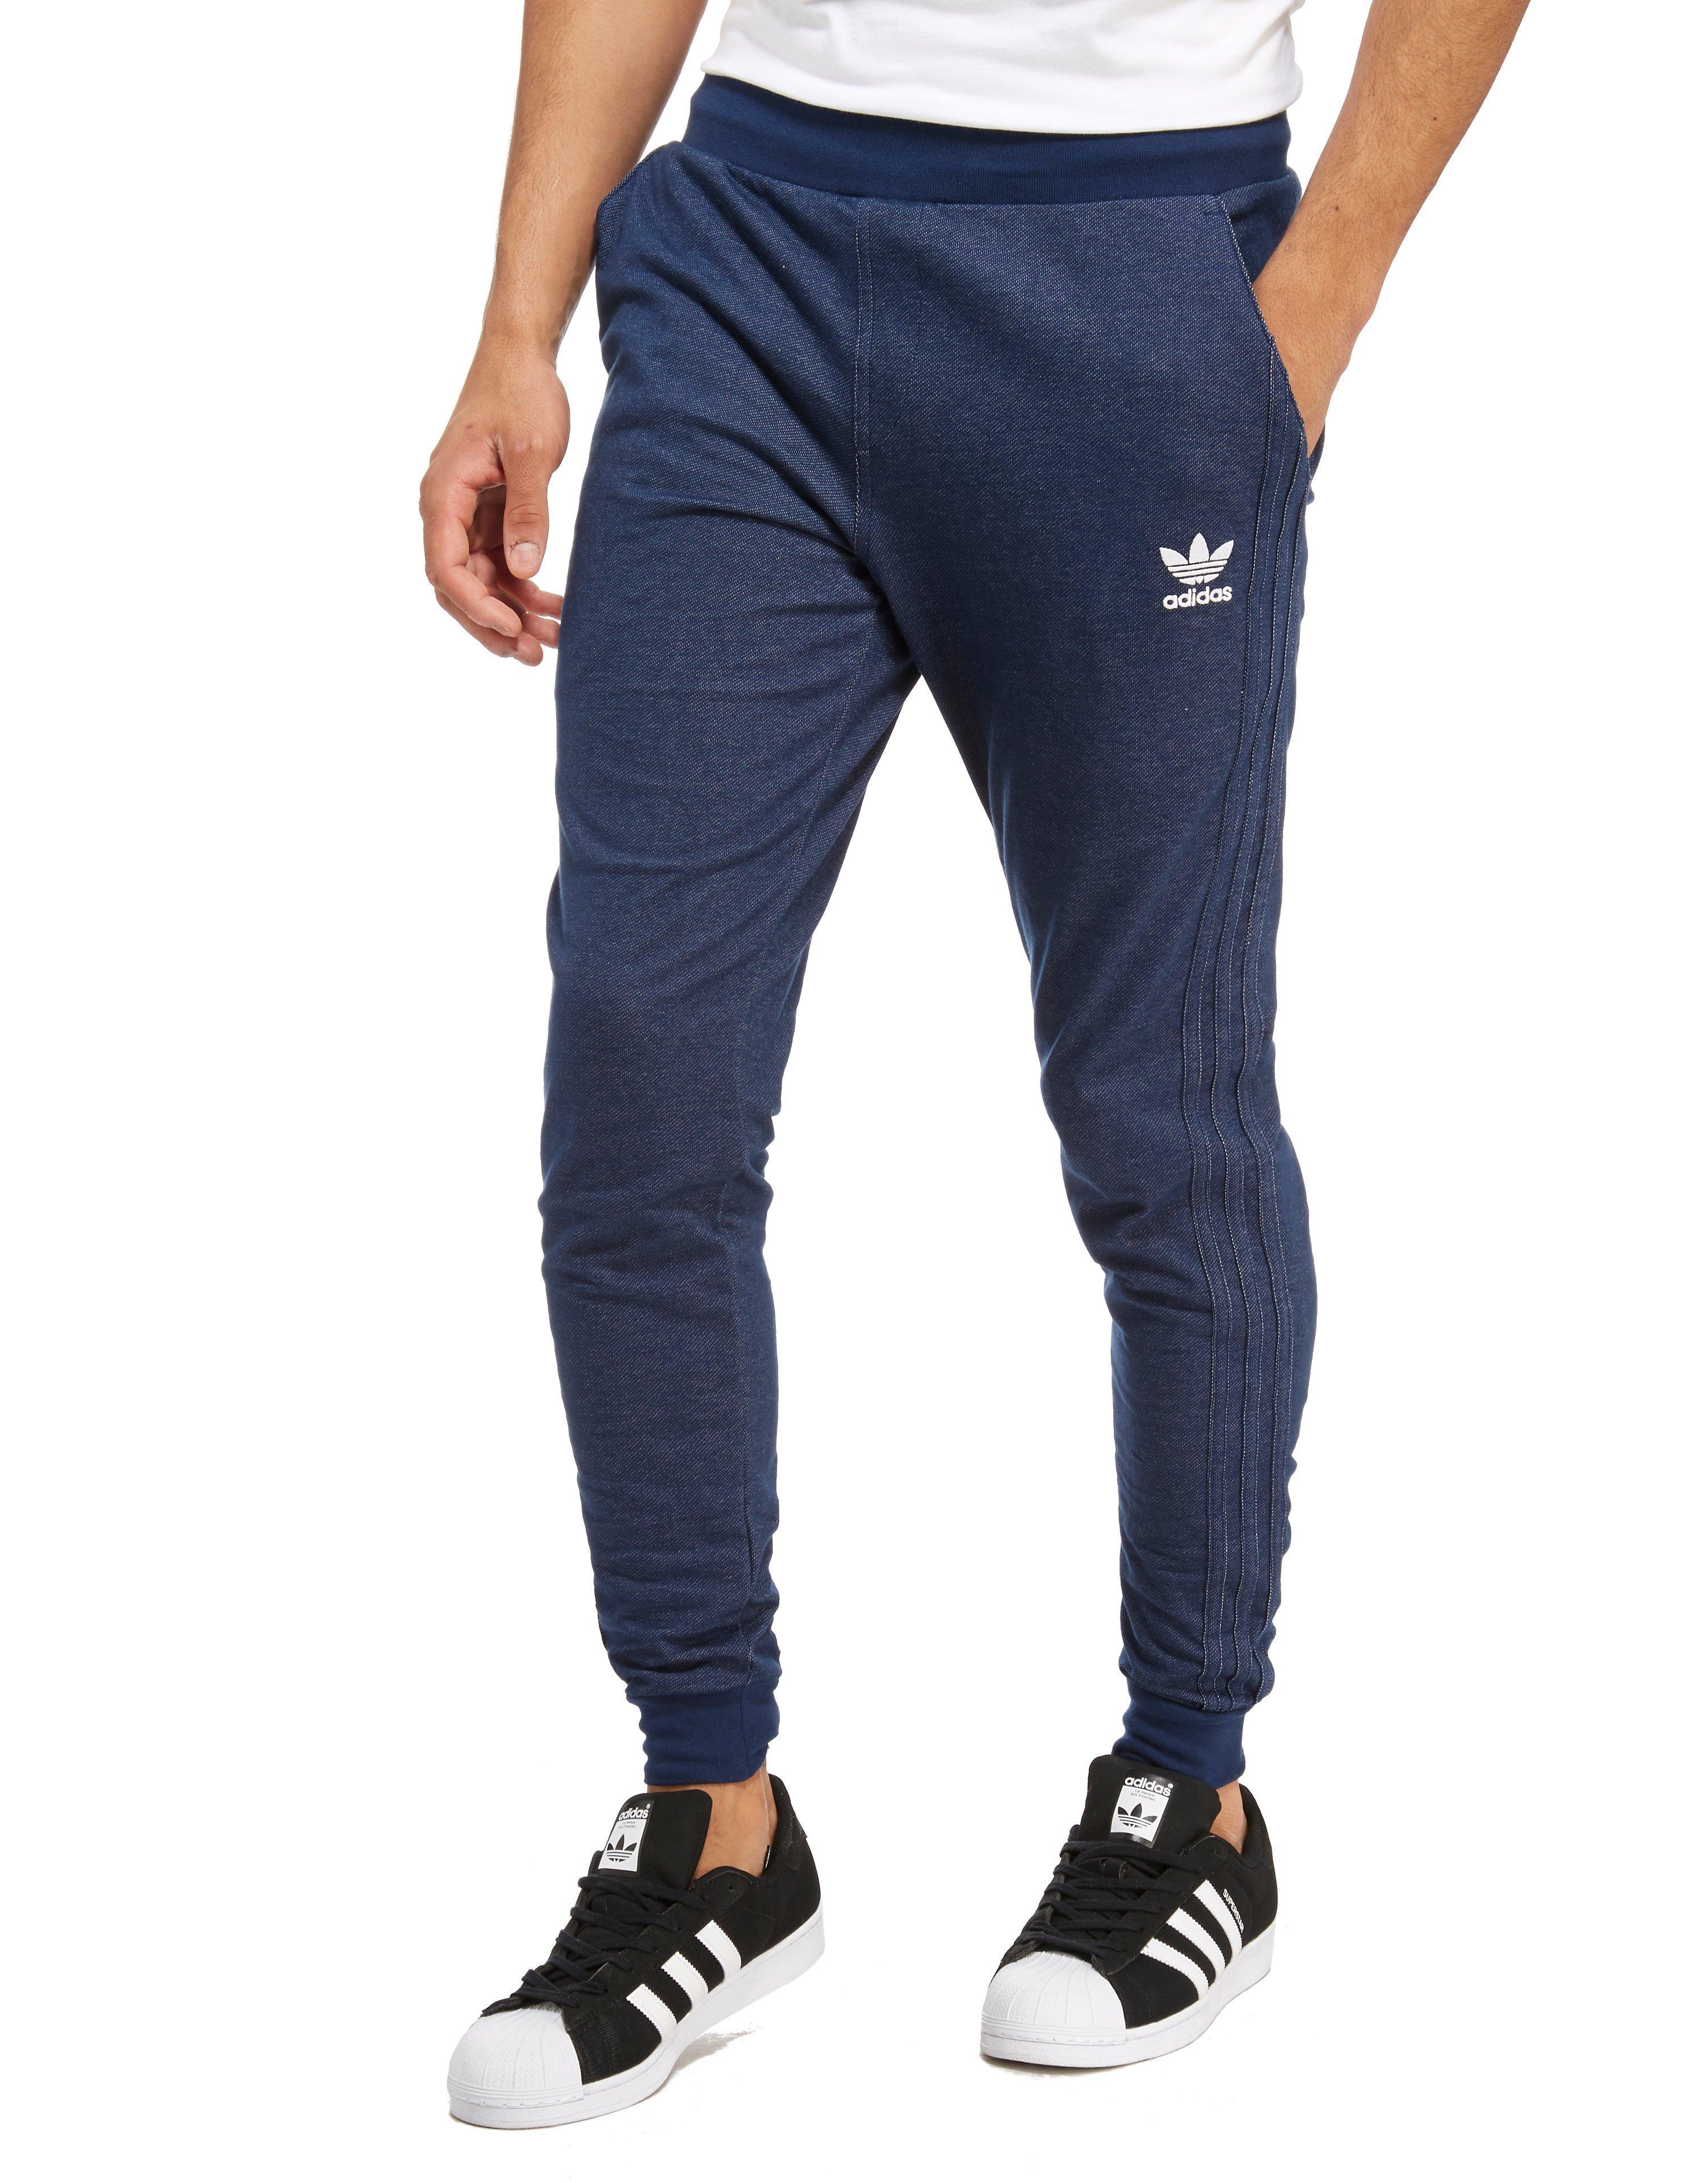 adidas Originals Denim Superstar Pants in Blue/White (Blue) for Men - Lyst